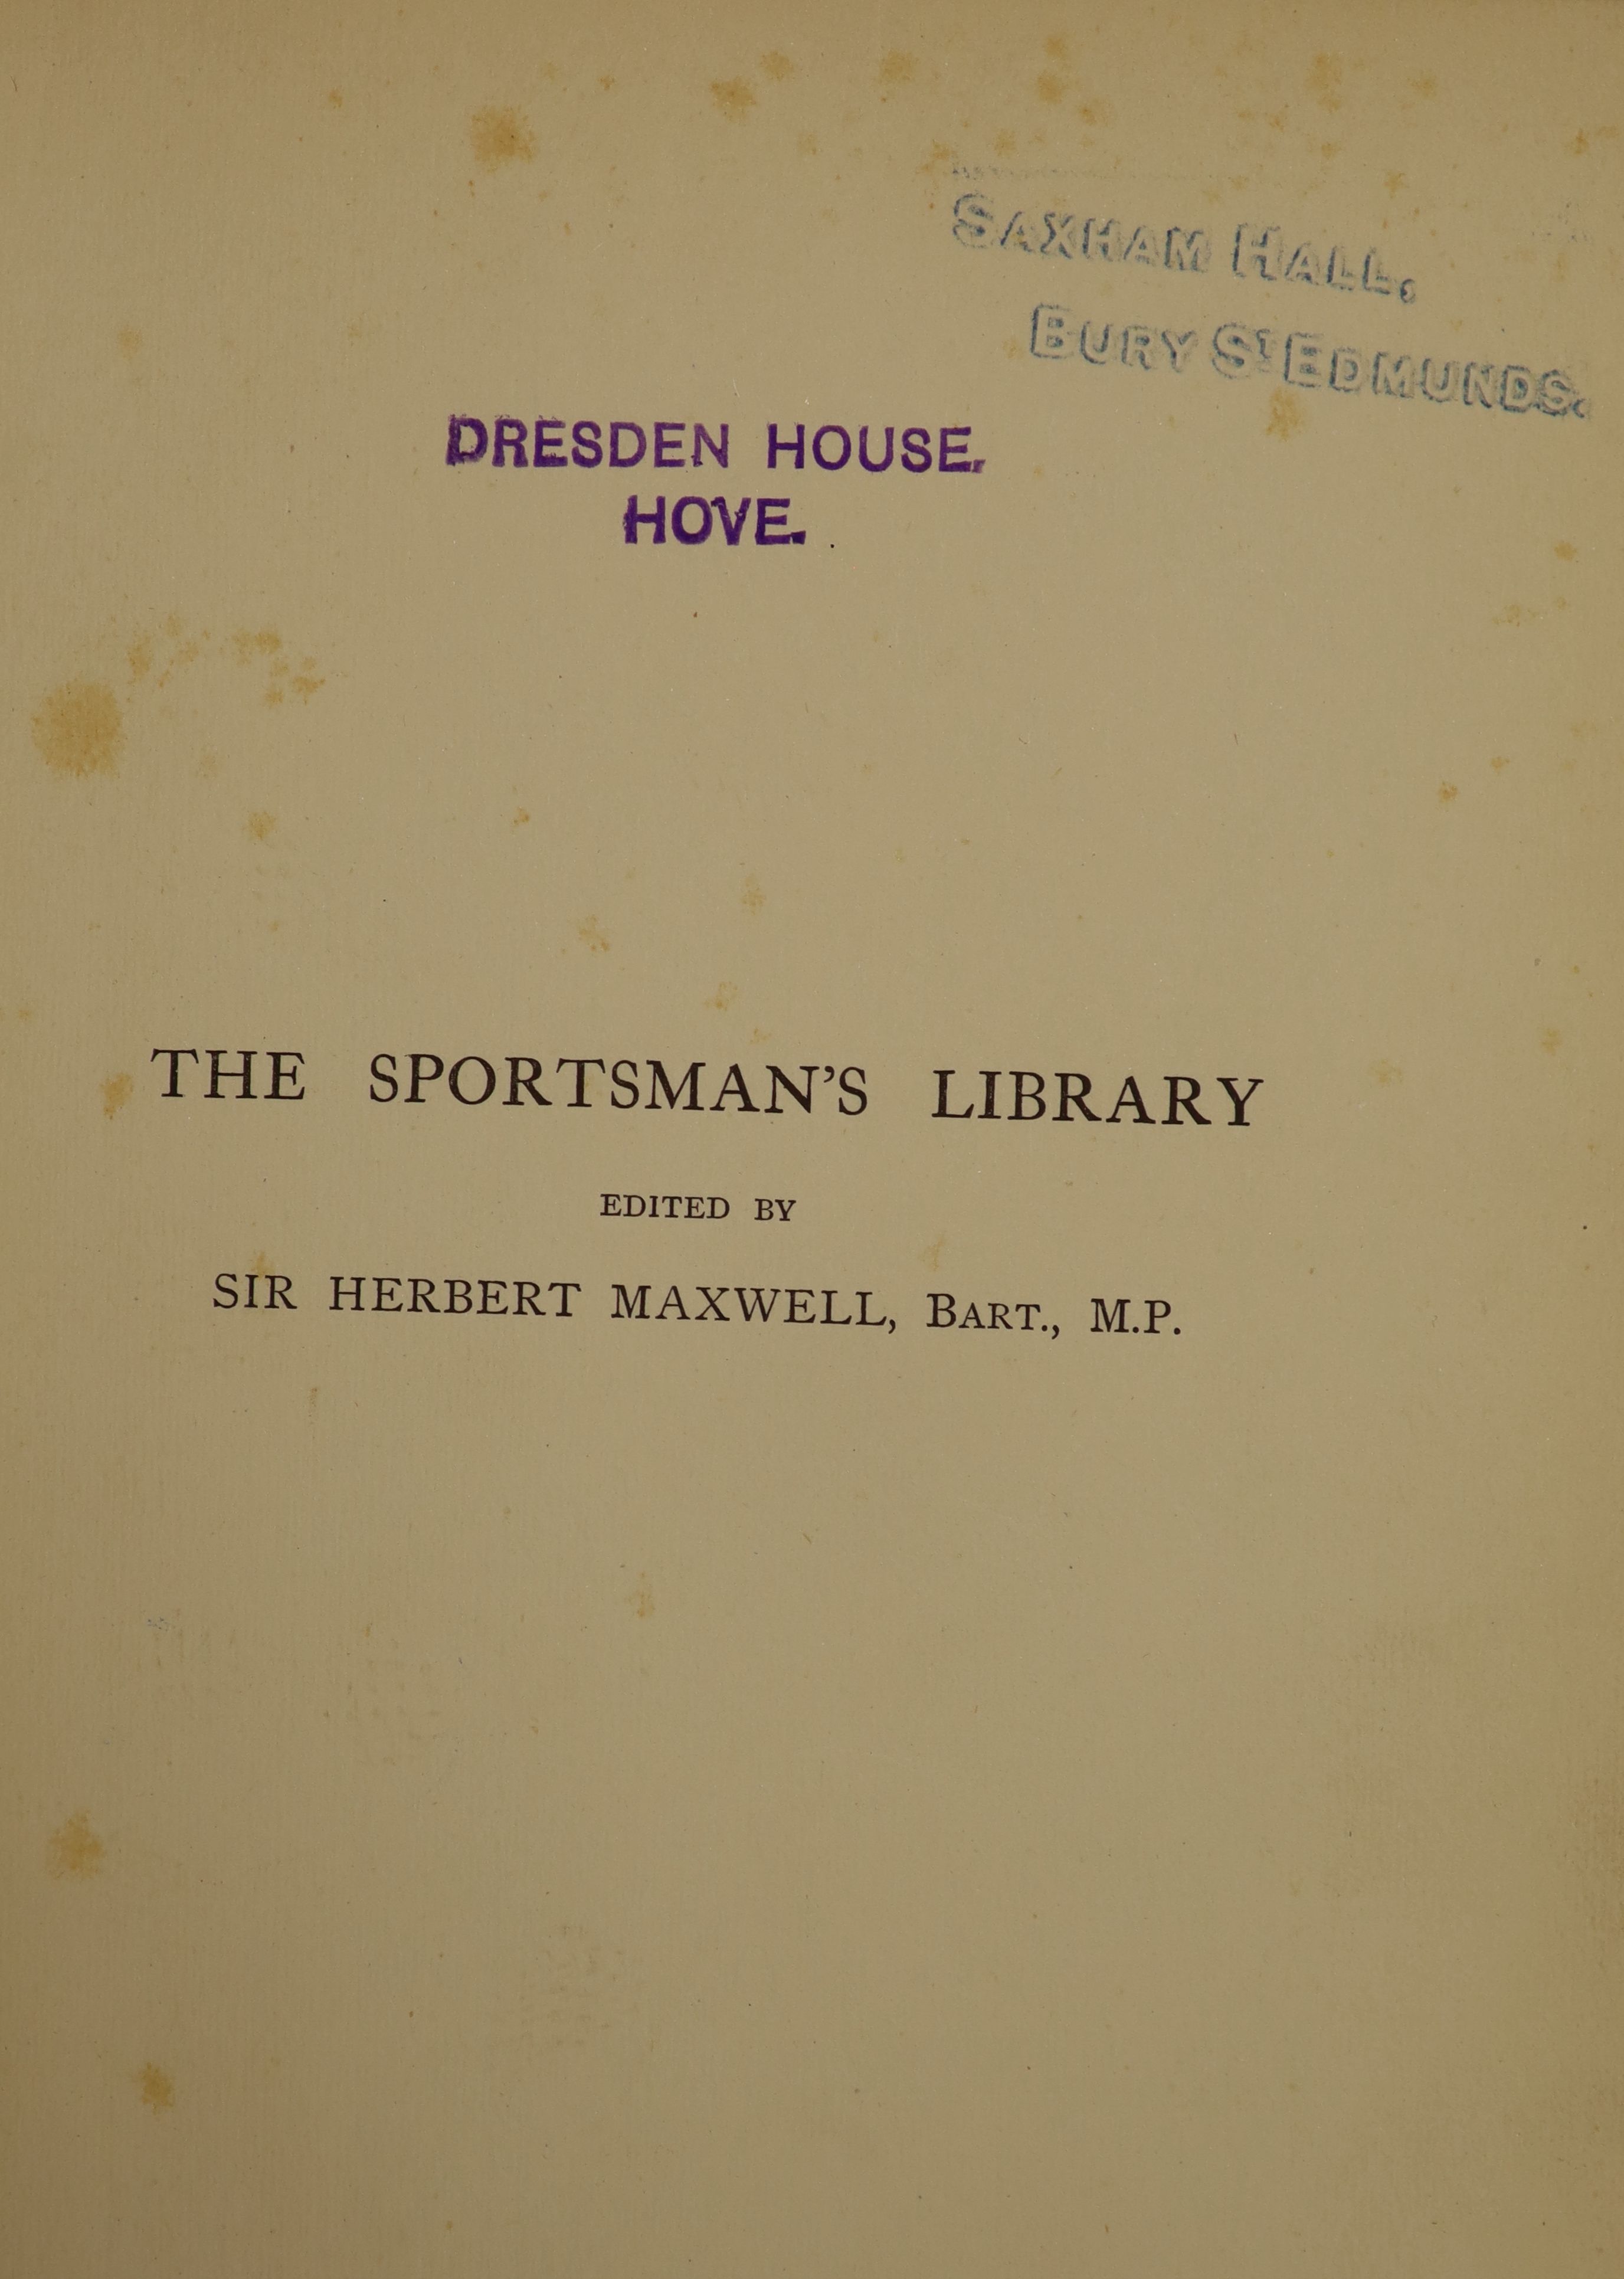 The Sportsman’s Library - edited by Sir Herbert Maxwell - 6 works, all half vellum - Scrope, William - The Art of Deer-Stalking, 1897; Berkeley, Grantley F. - Reminisces of a Huntsman, 1897; ‘’Nimrod’’, [Apperley, Charle